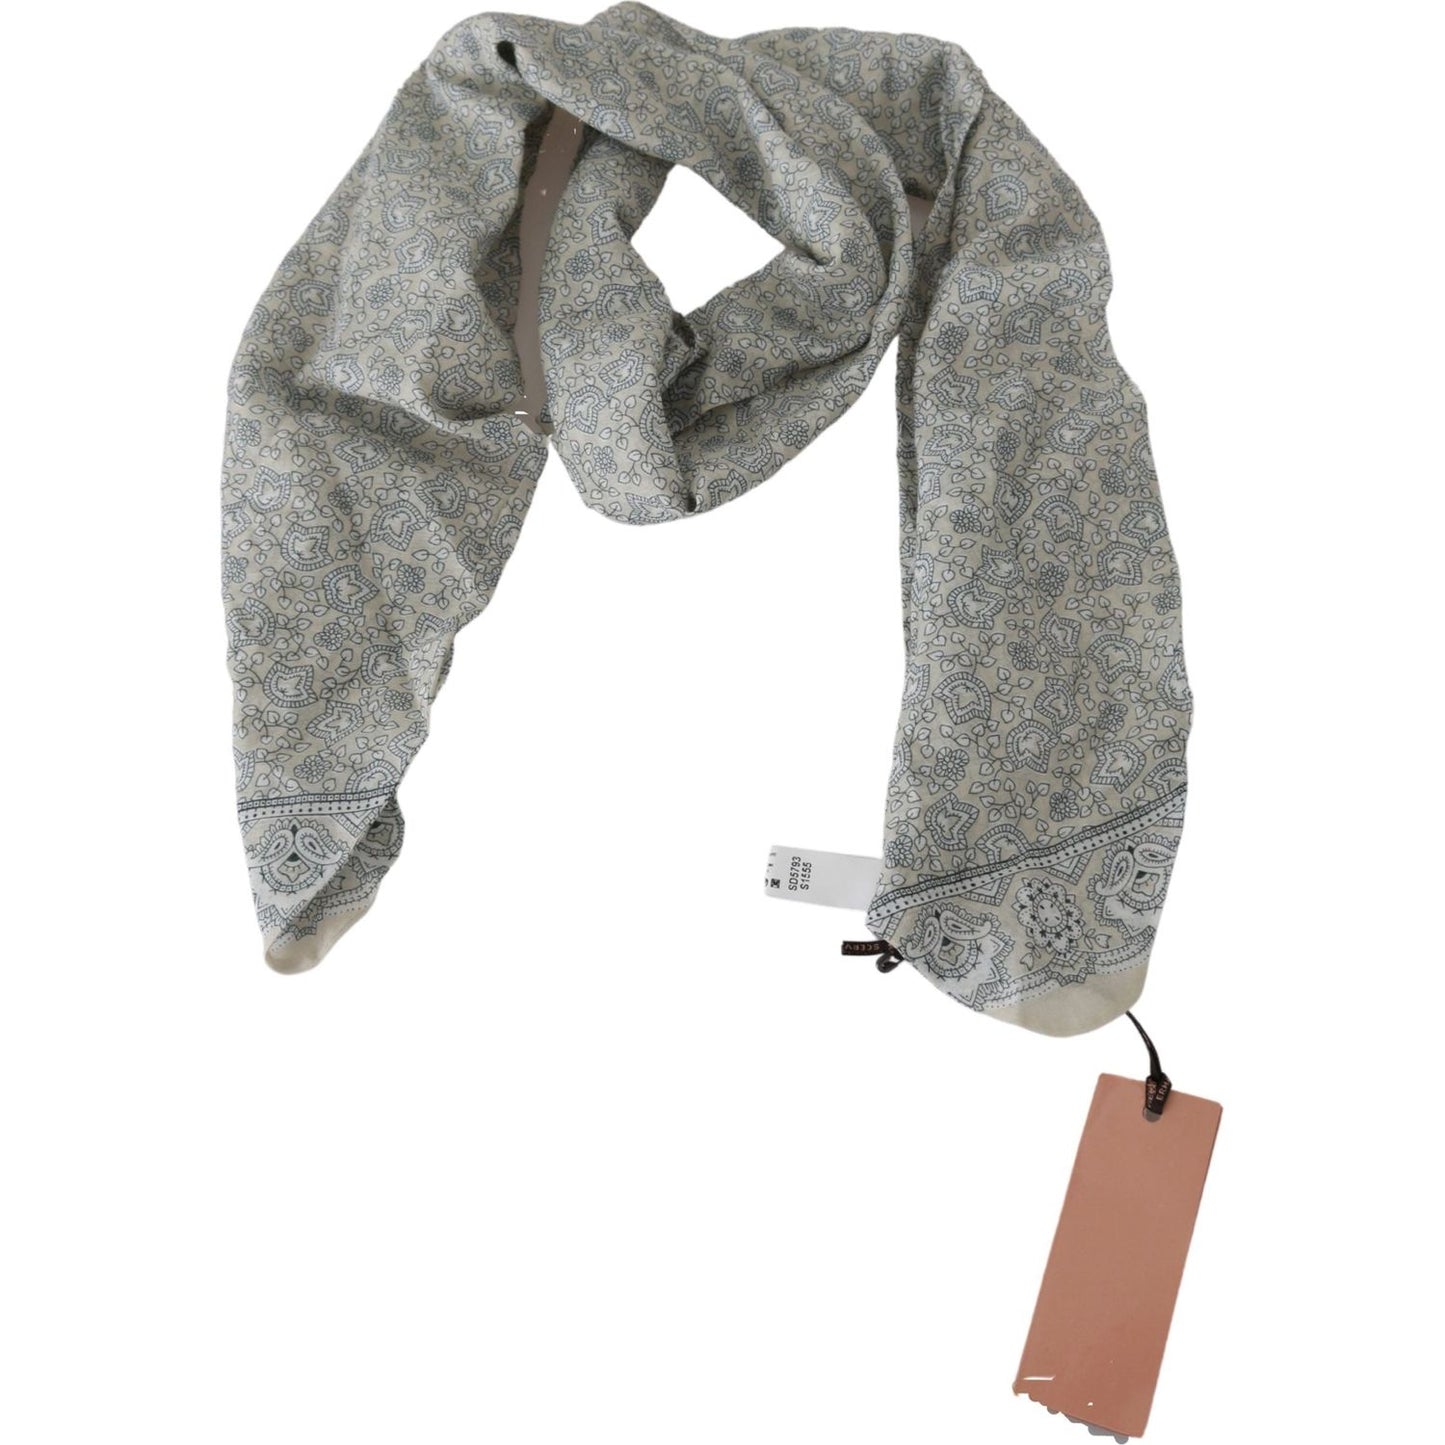 Ermanno Scervino Chic Cotton Scarf in Beige & Blue Fantasy Print Wrap Shawl Scarves cotton-beige-blue-fantasy-print-scarf